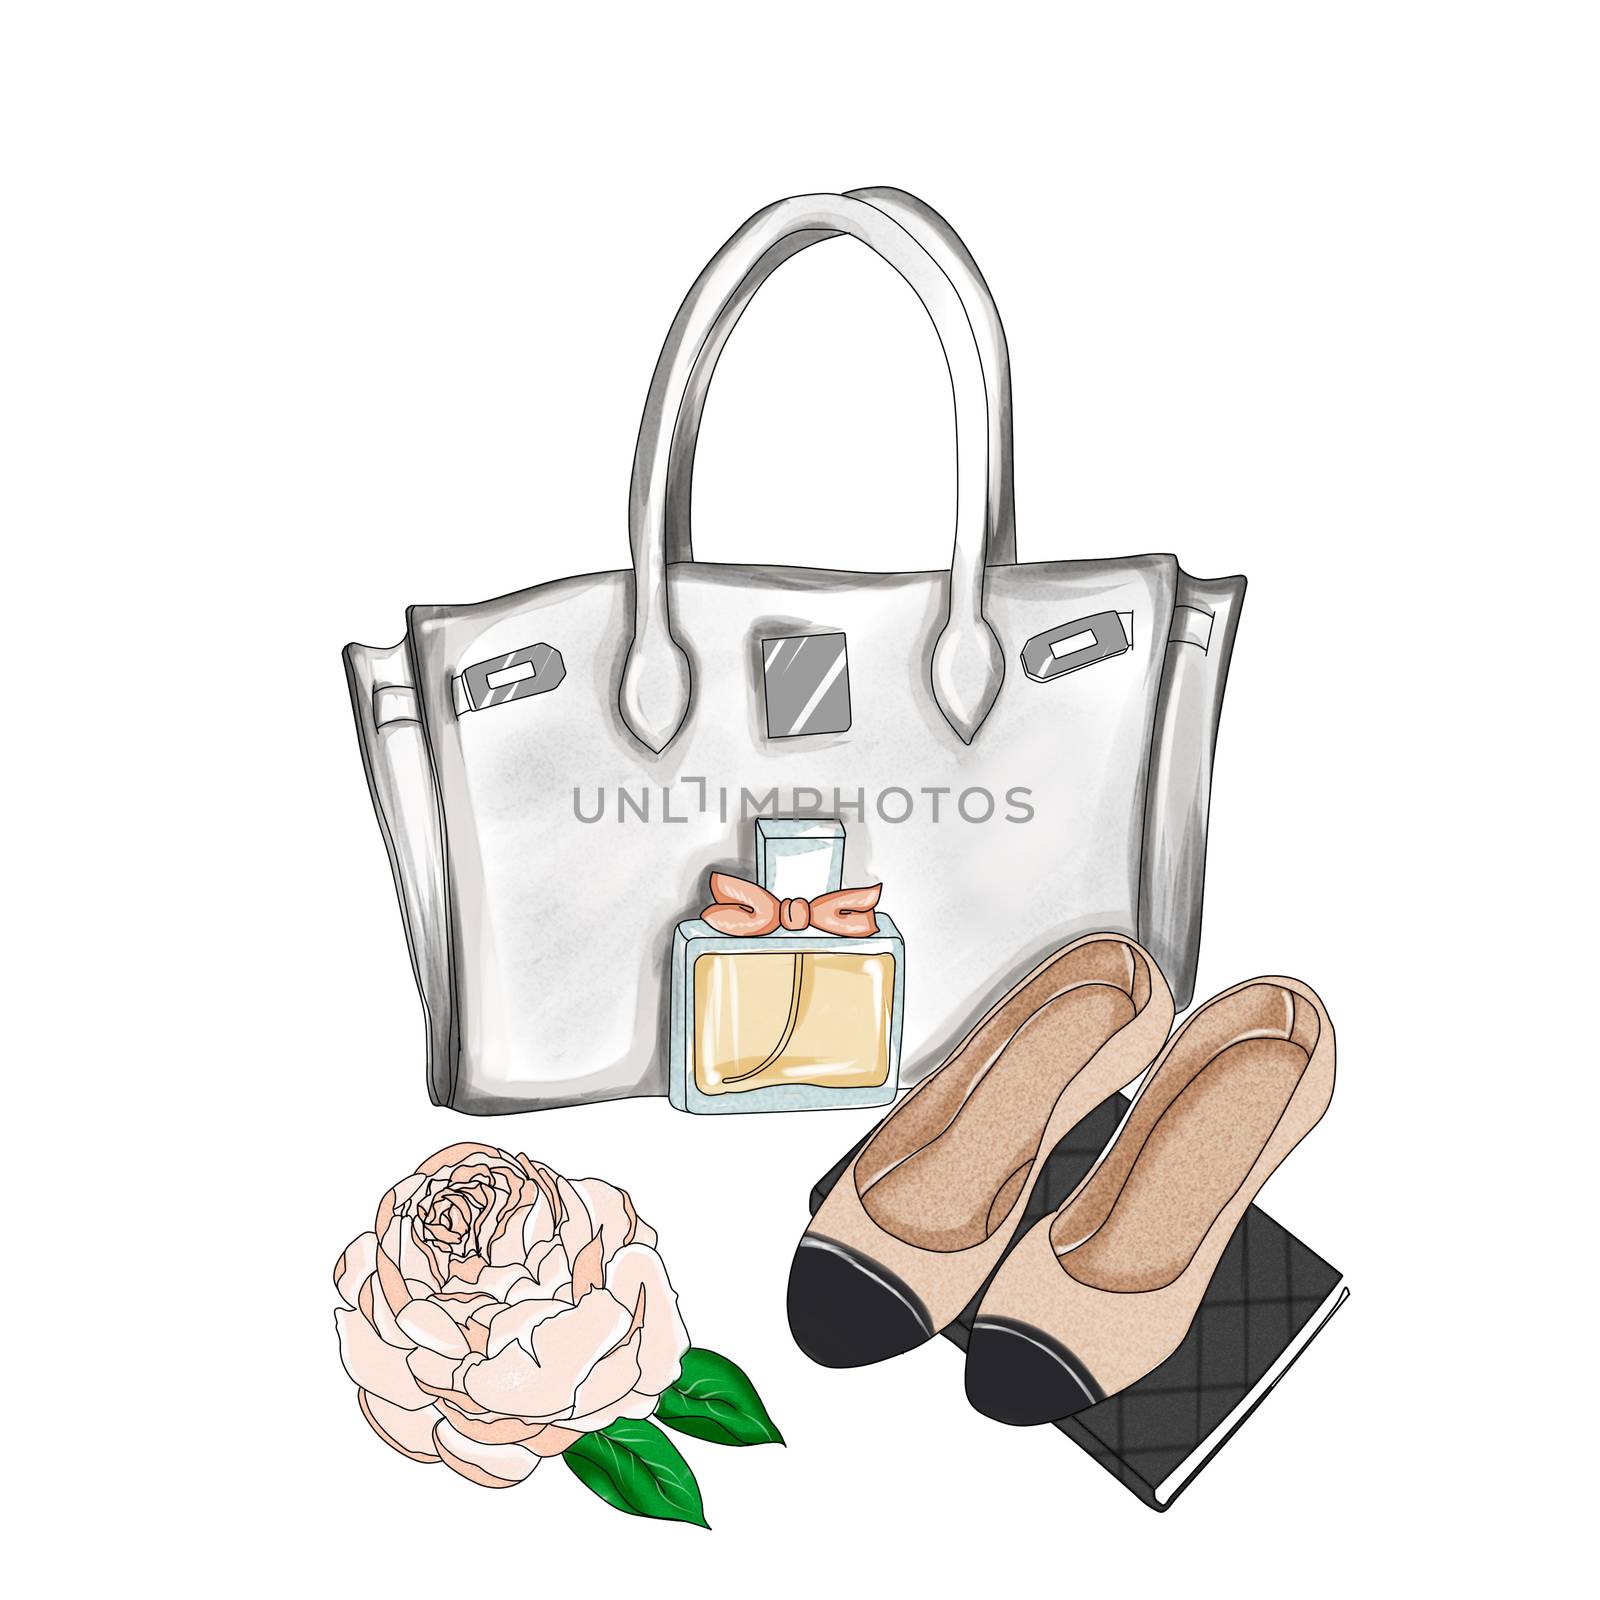 watercolor illustration - Fashion Illustration - Hand drawn raster background - designer bag and flat shoes